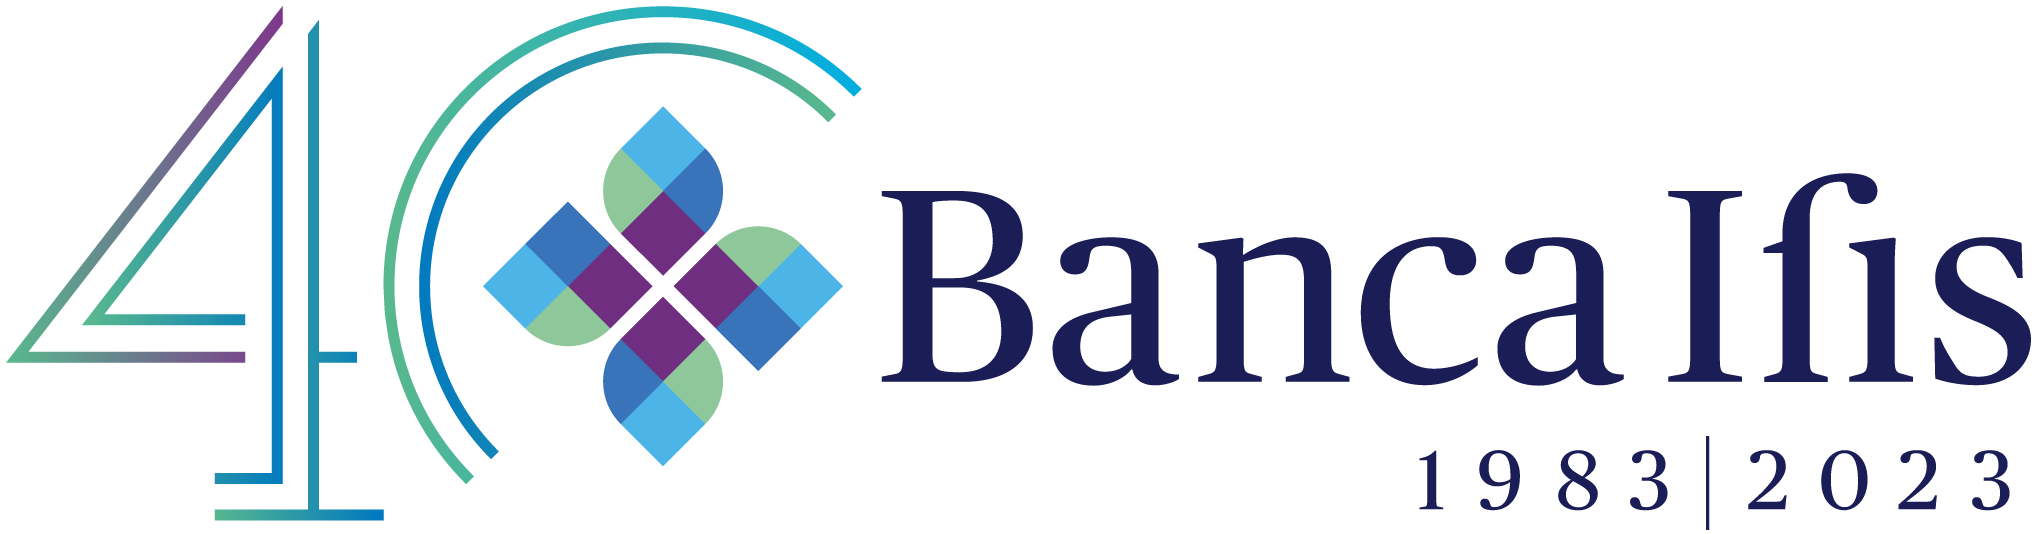 Banca Ifis S.p.A. logo